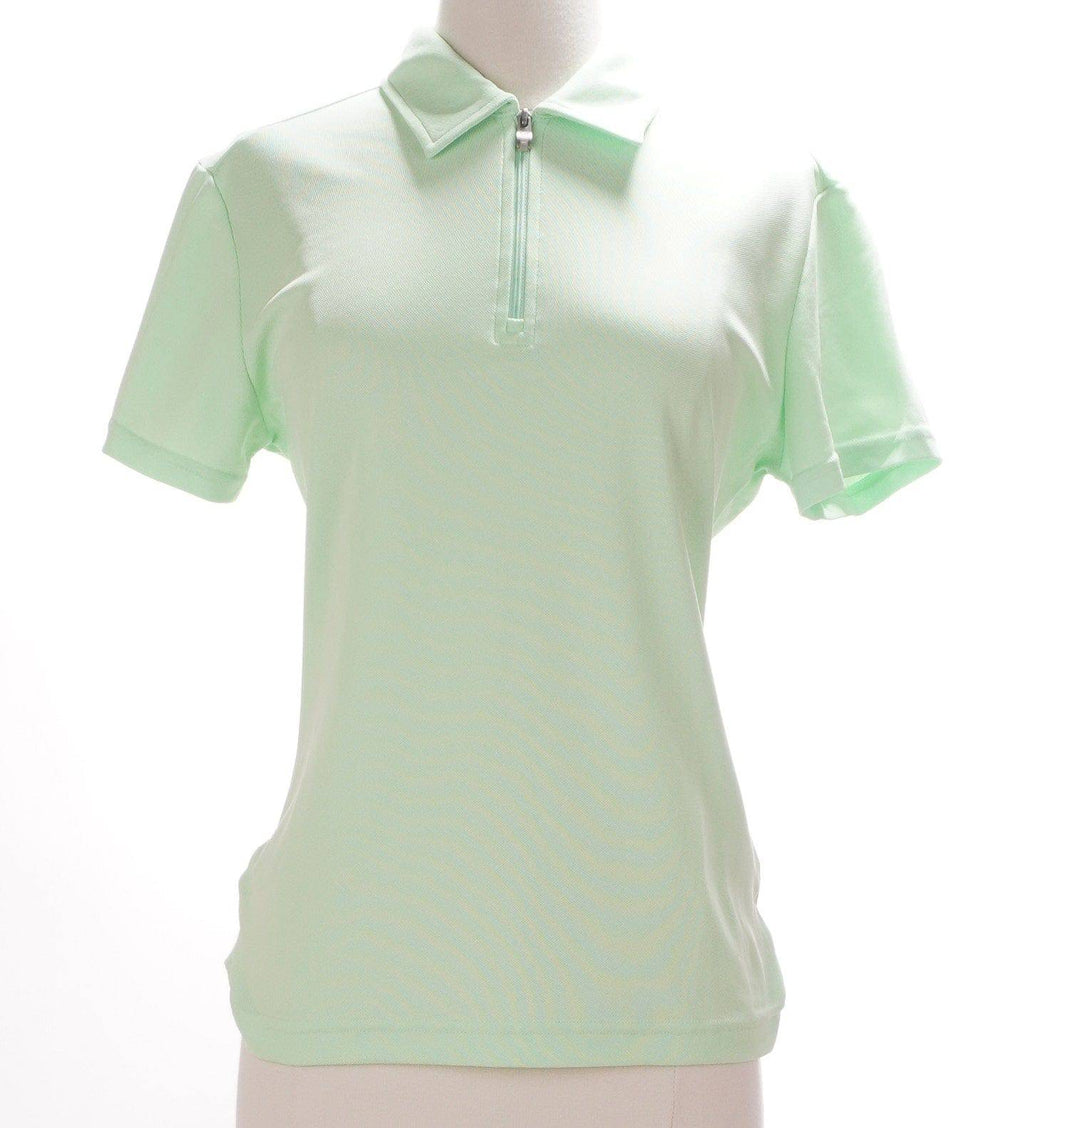 Nivo Green / Medium / Consignment Nivo Green Short Sleeve Top - Size Medium